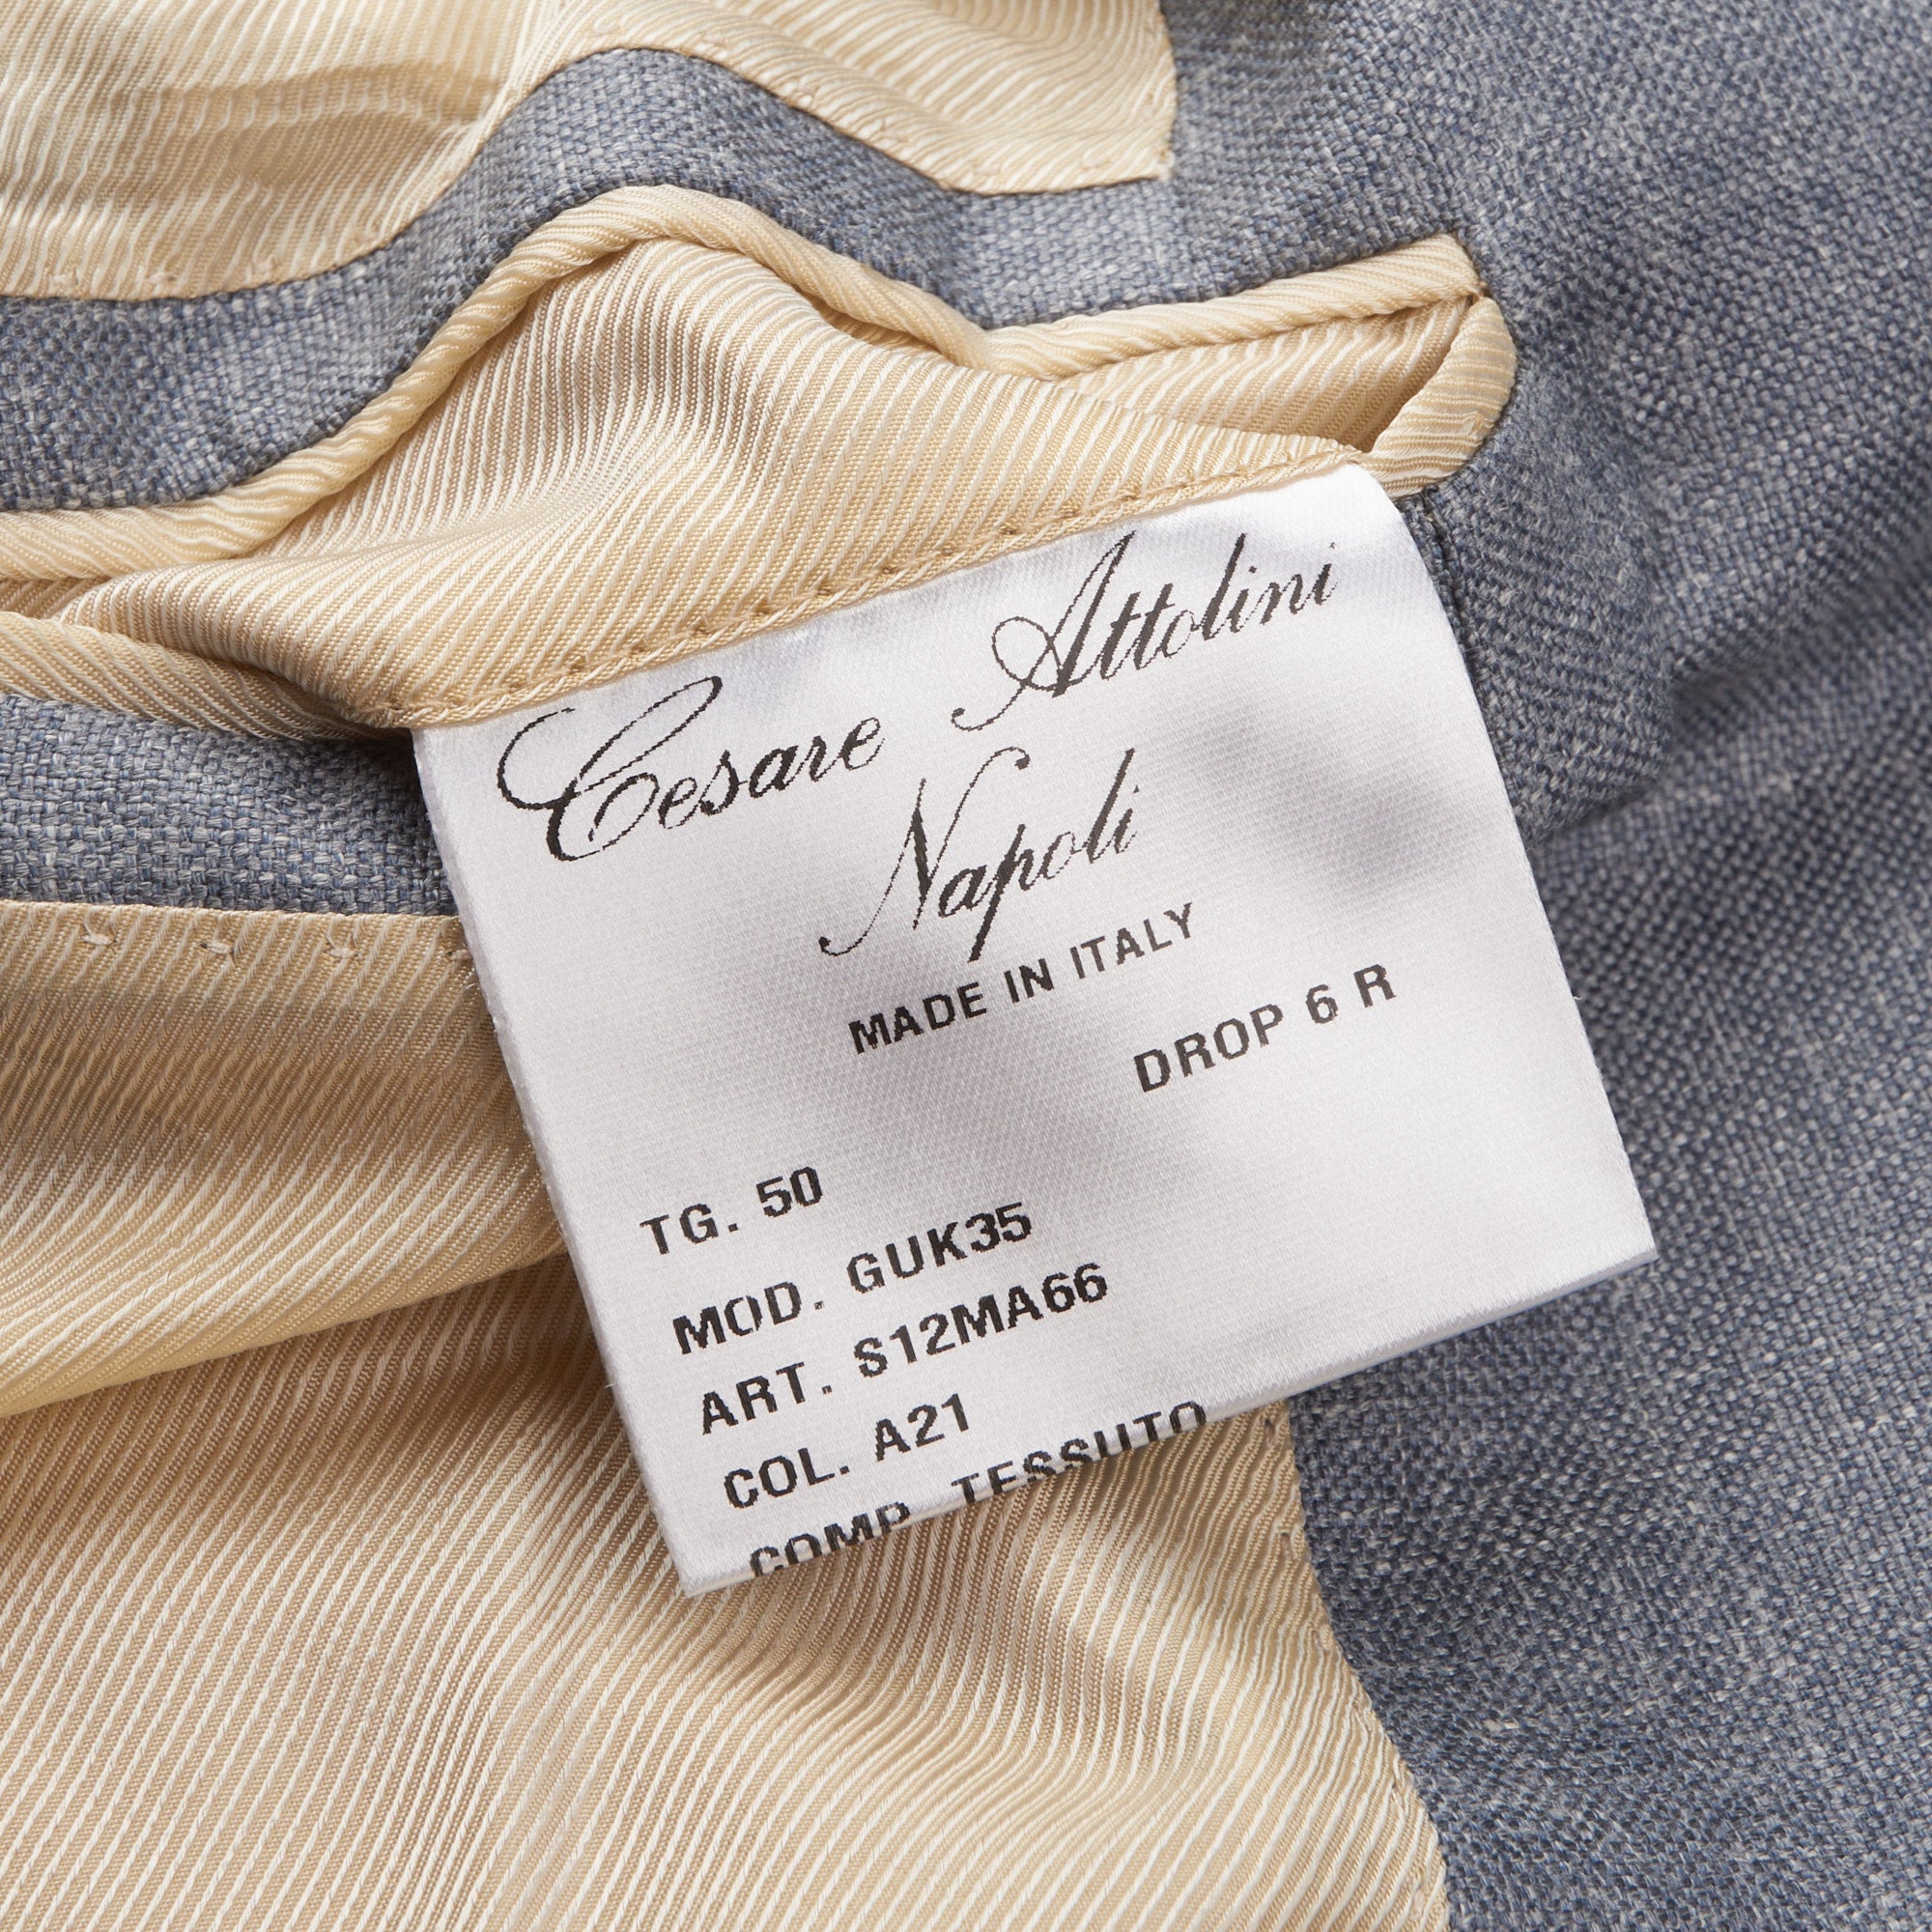 CESARE ATTOLINI for TINCATI Handmade Gray Cashmere-Silk-Linen Jacket EU 50 US 40 CESARE ATTOLINI